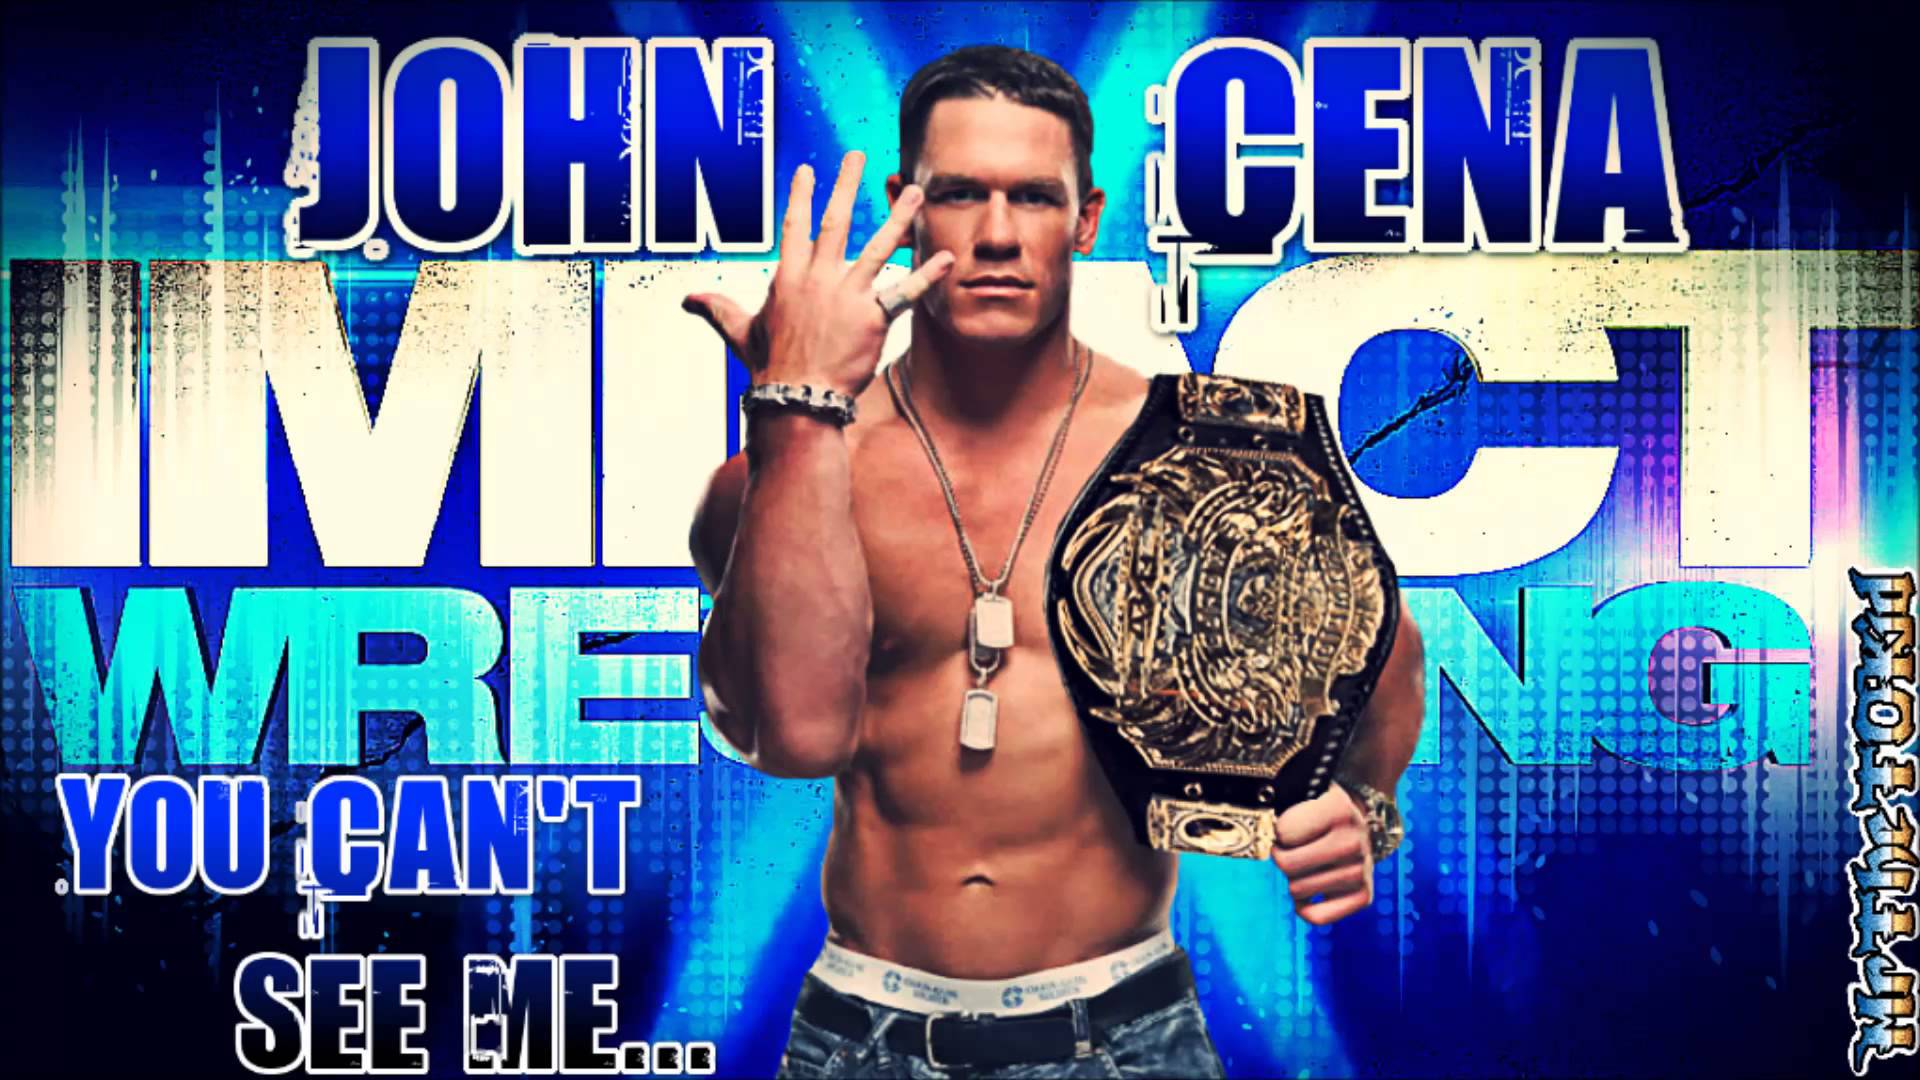 John Cena Full HD 1080p Image Photo Pics Wallpaper